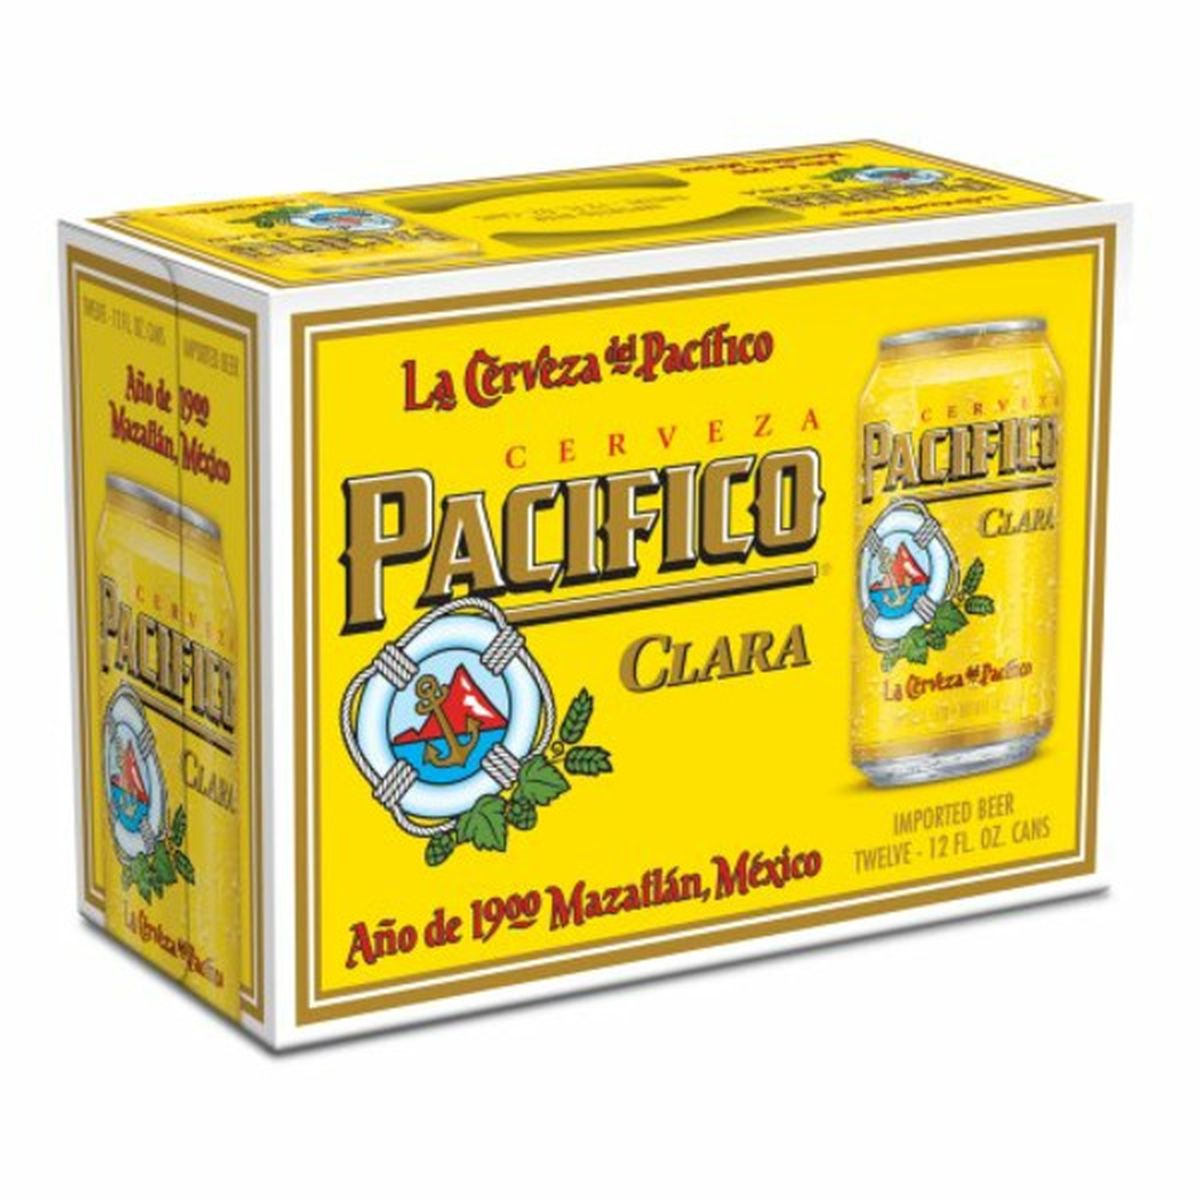 Calories in Pacifico Clara 12/12 oz cans